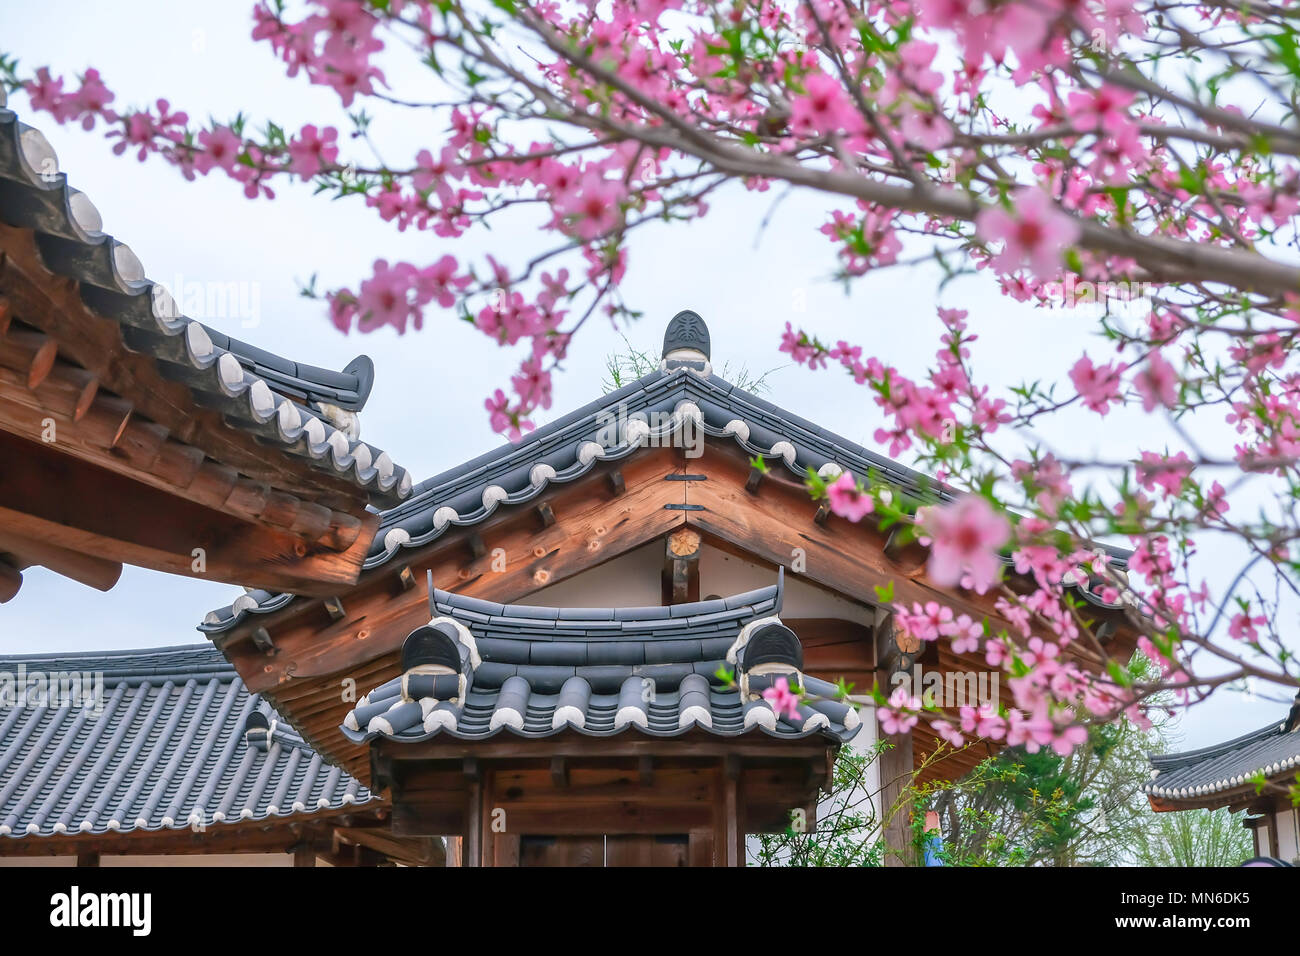 Korean building with beautiful cherry blossom, South Korea. Stock Photo